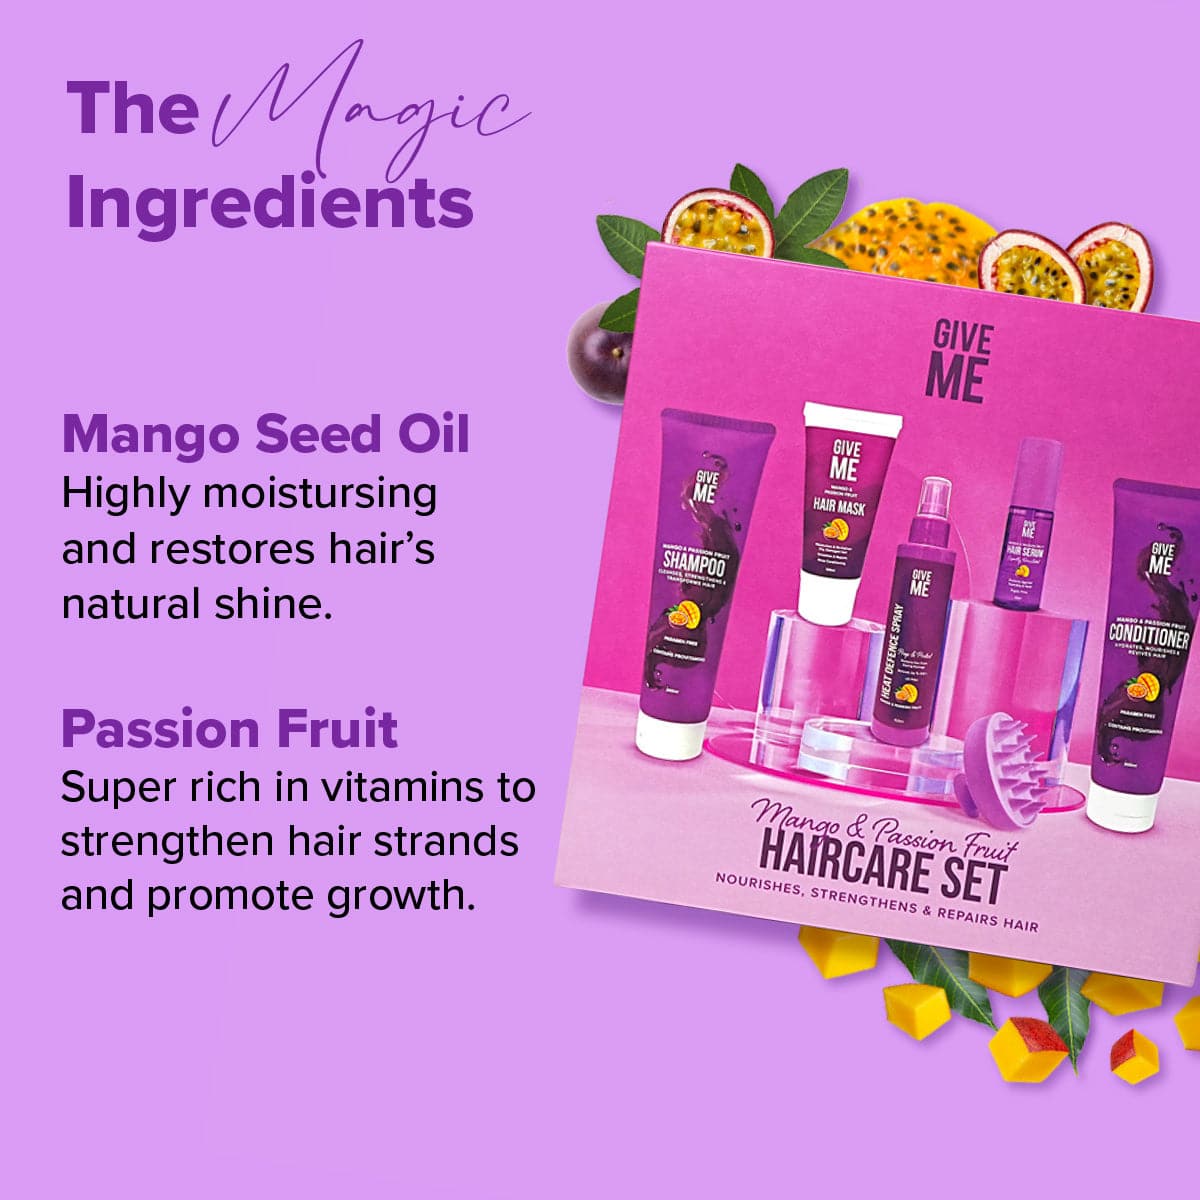 Mango & Passion Fruit Full Haircare Set - Give Me Cosmetics